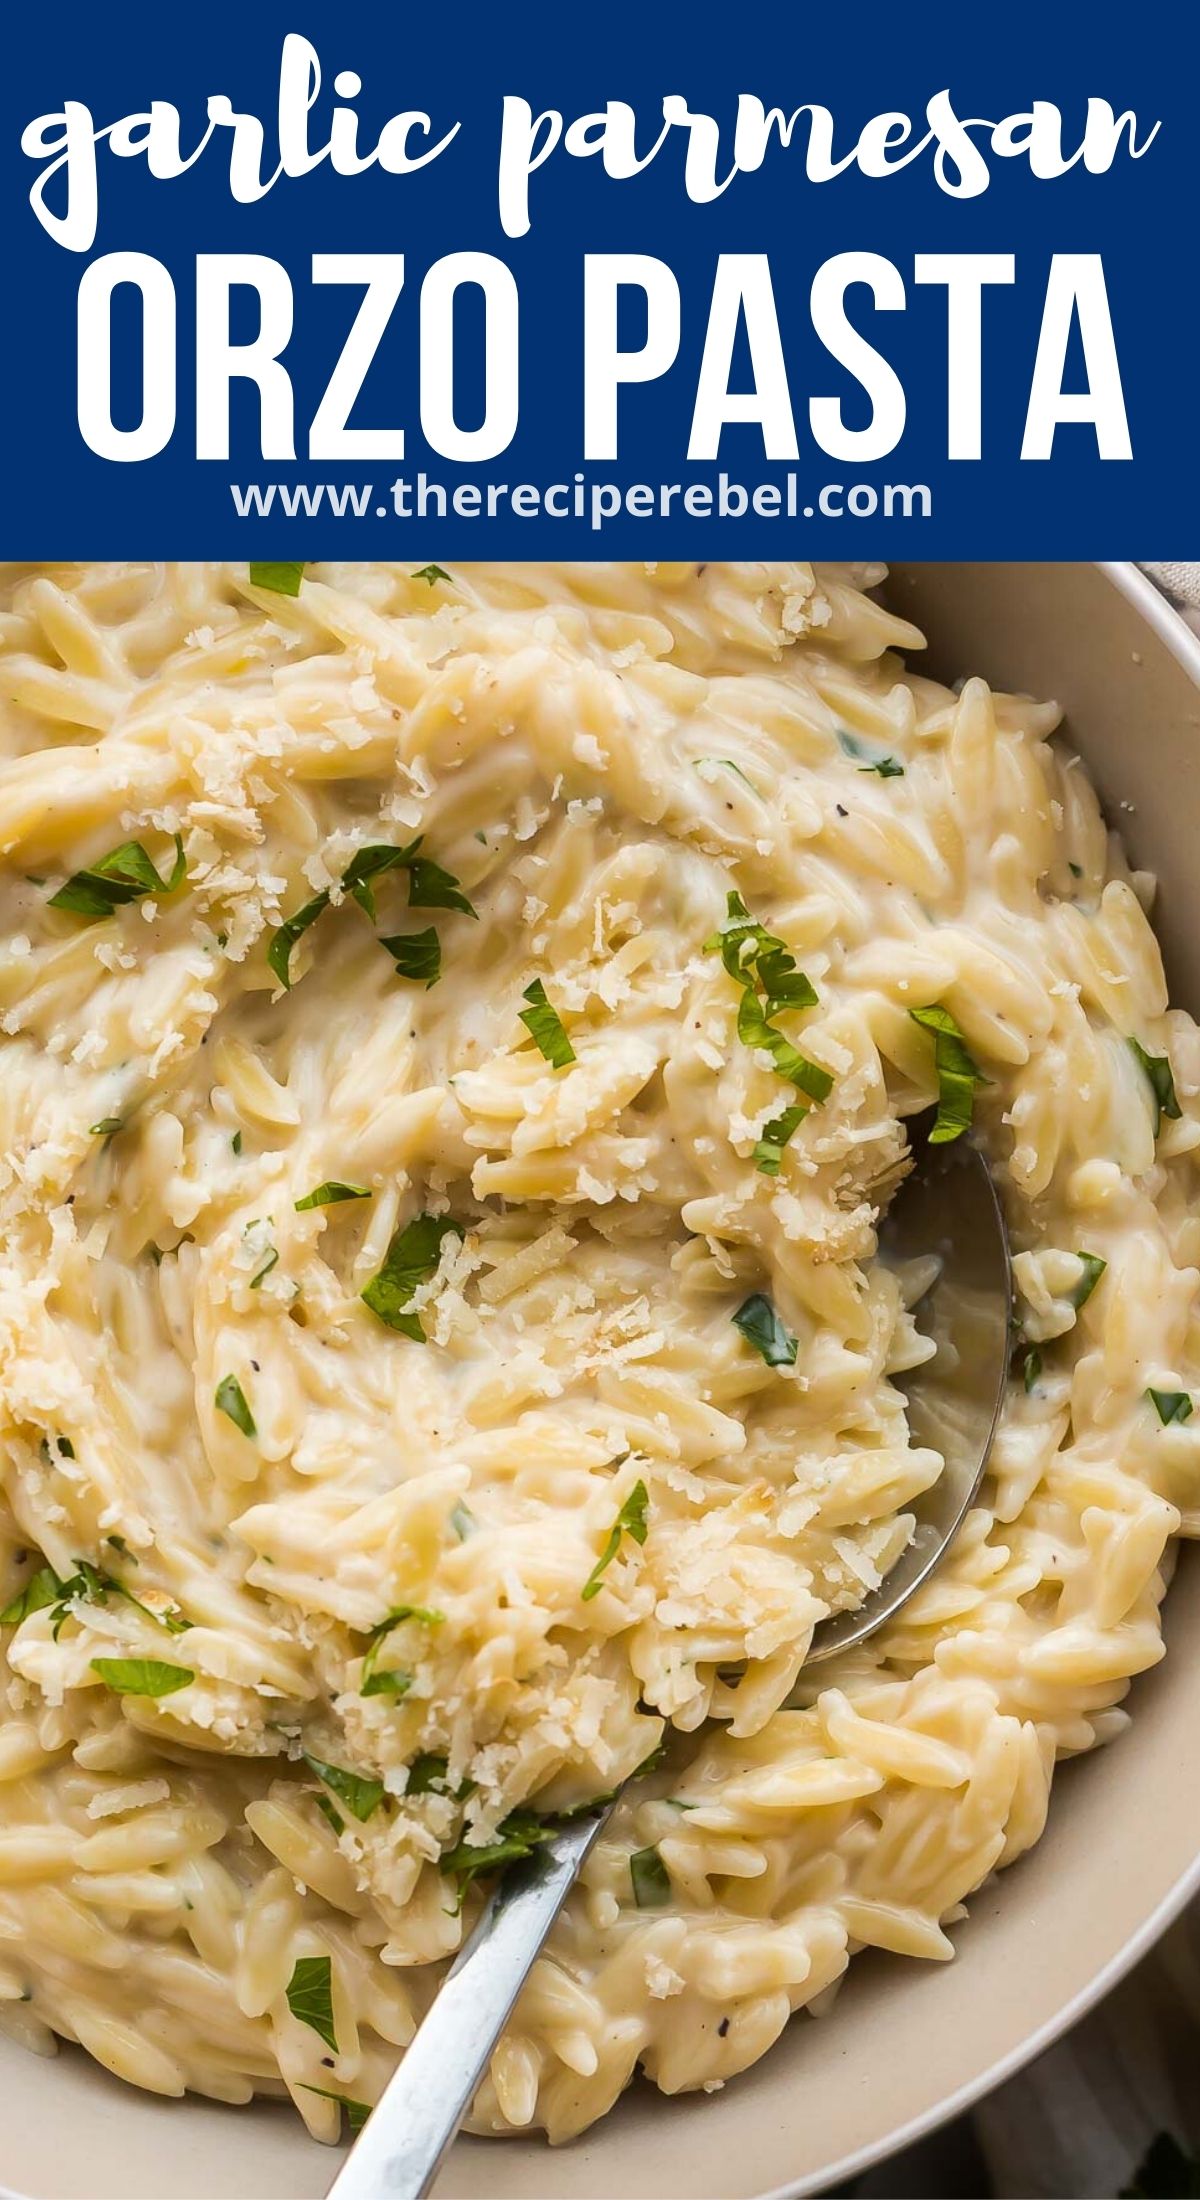 https://www.thereciperebel.com/wp-content/uploads/2021/12/garlic-parmesan-orzo-pasta-www.thereciperebel.com-pin.jpg